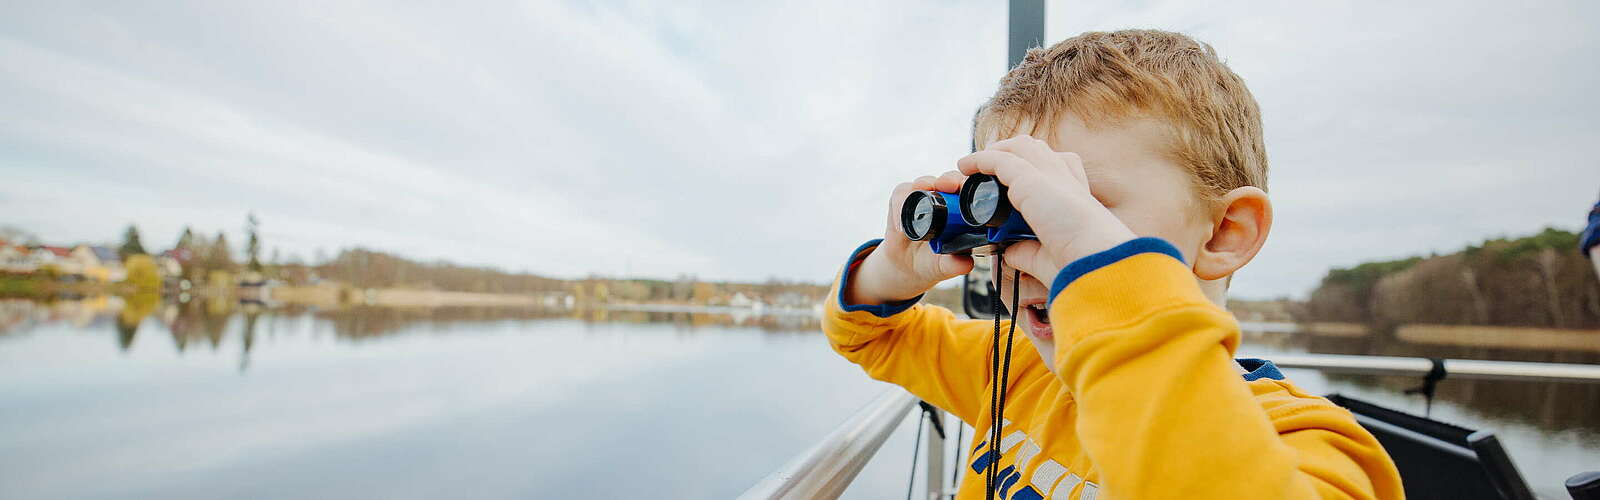 Boy with binoculars,
        
    

        Picture: Tourismusverband Ruppiner Seenland e.V./Julia Nimke